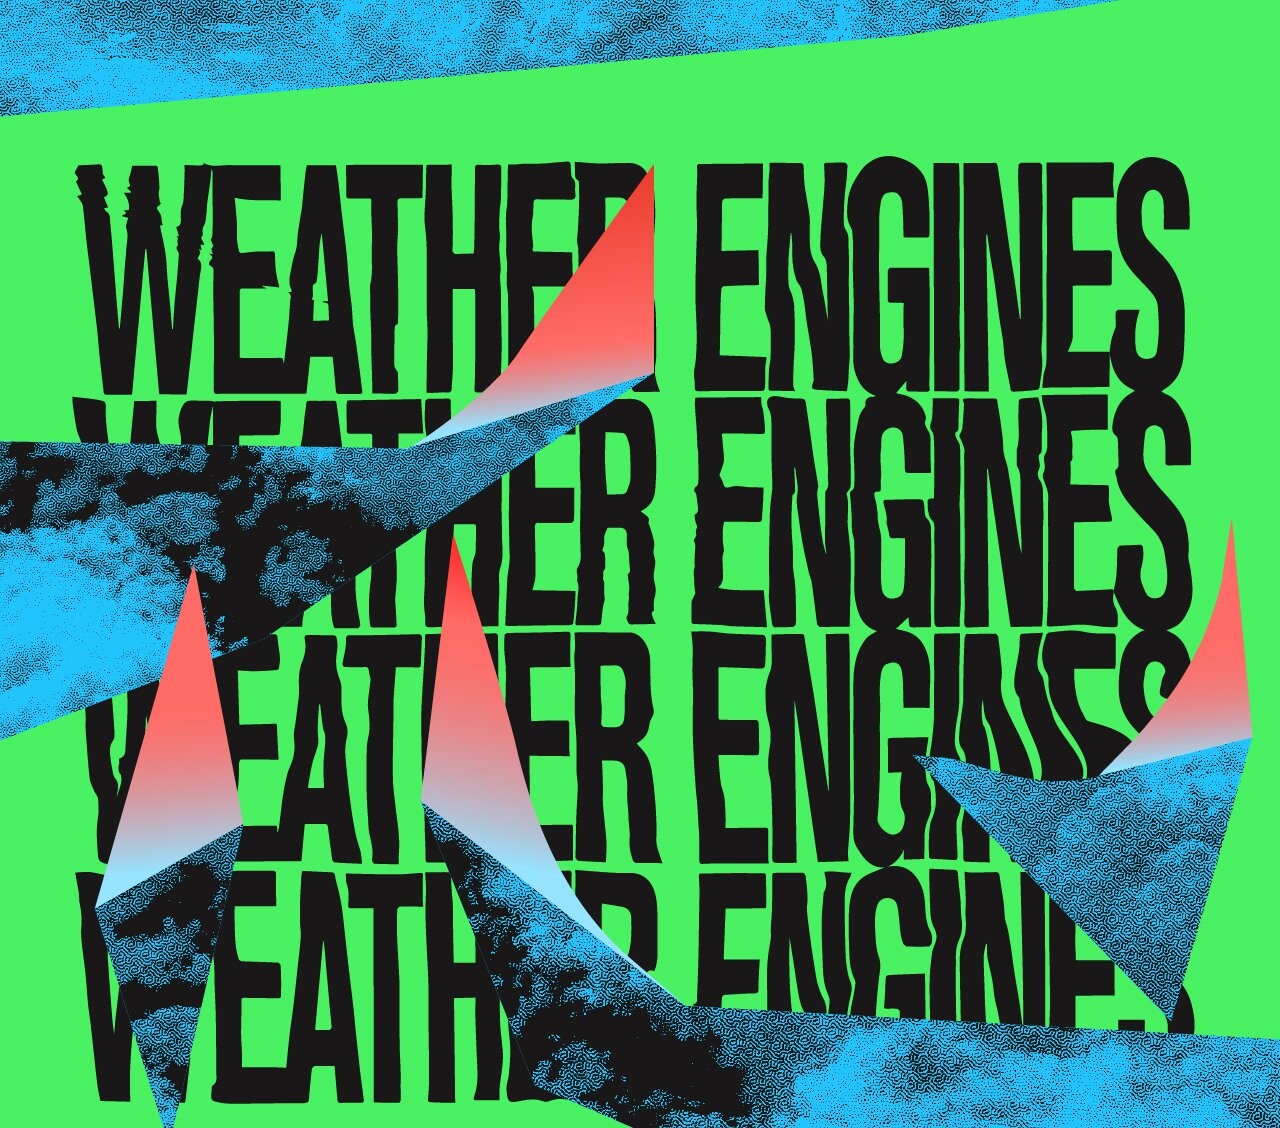 More information about "Weather Engines: Ένα culture πολυμορφικό project για το περιβάλλον"